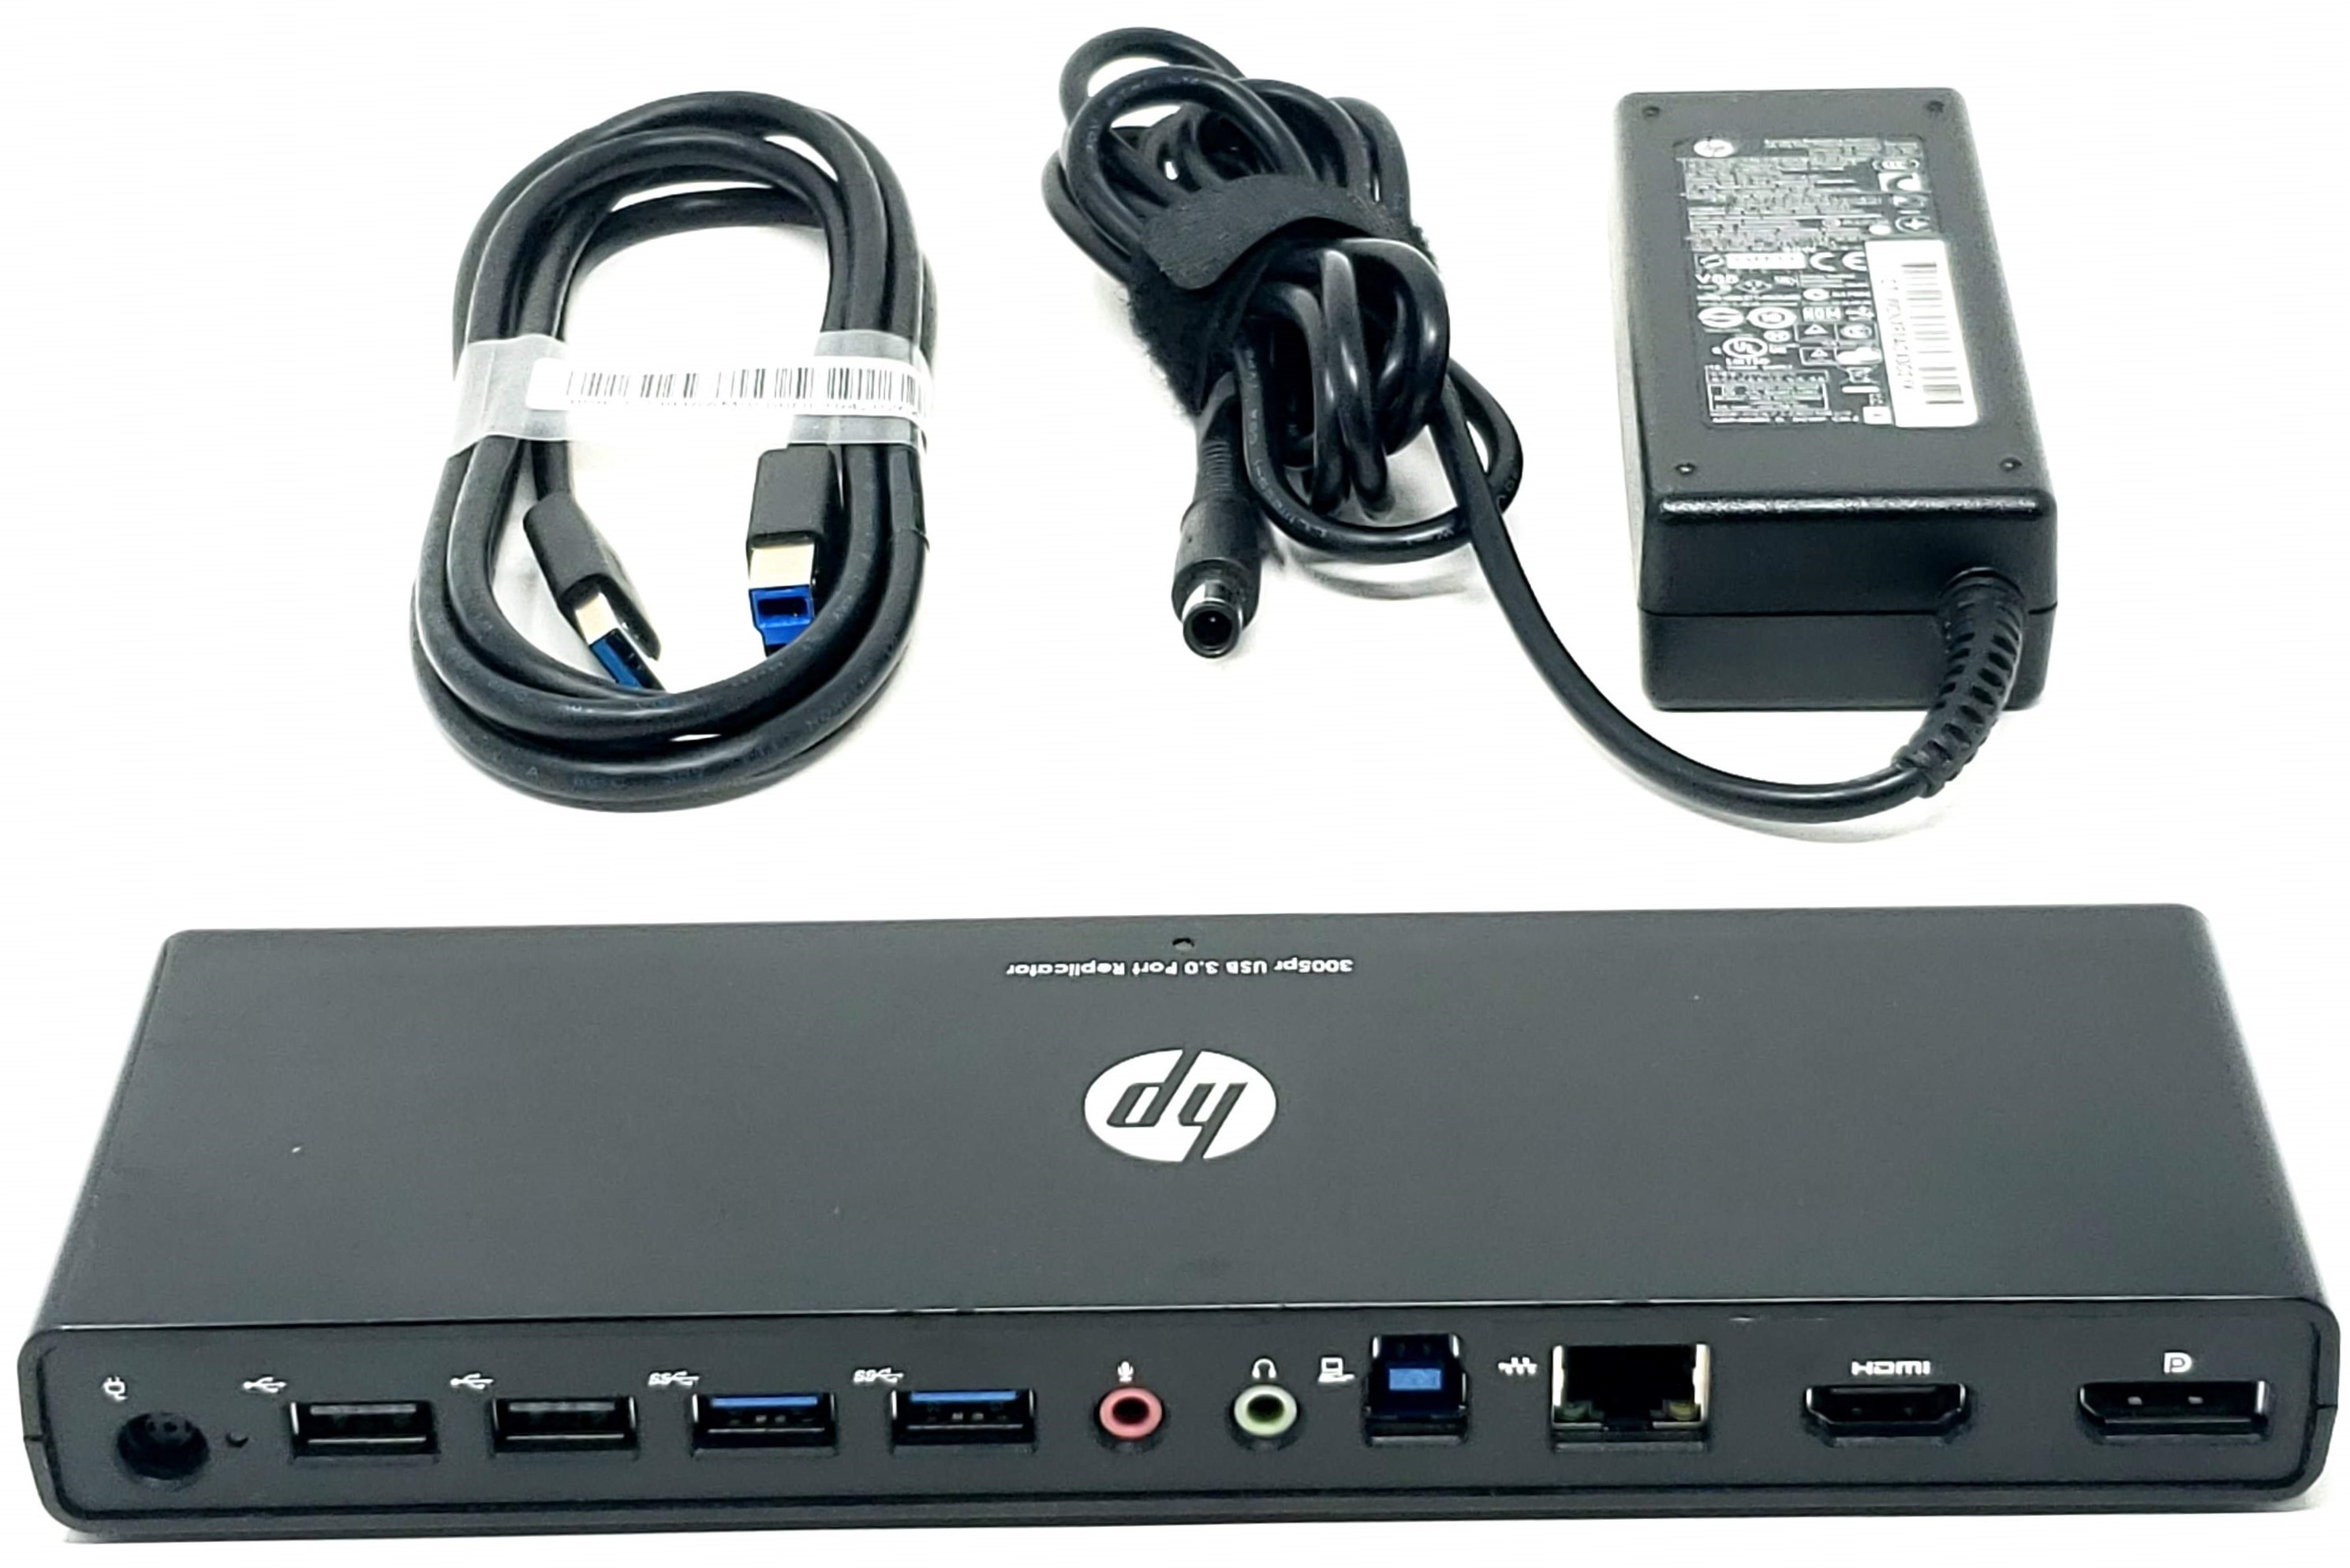 HP - 3005pr USB Port Replicator / Docking Station for HP Computers - CPU Medics